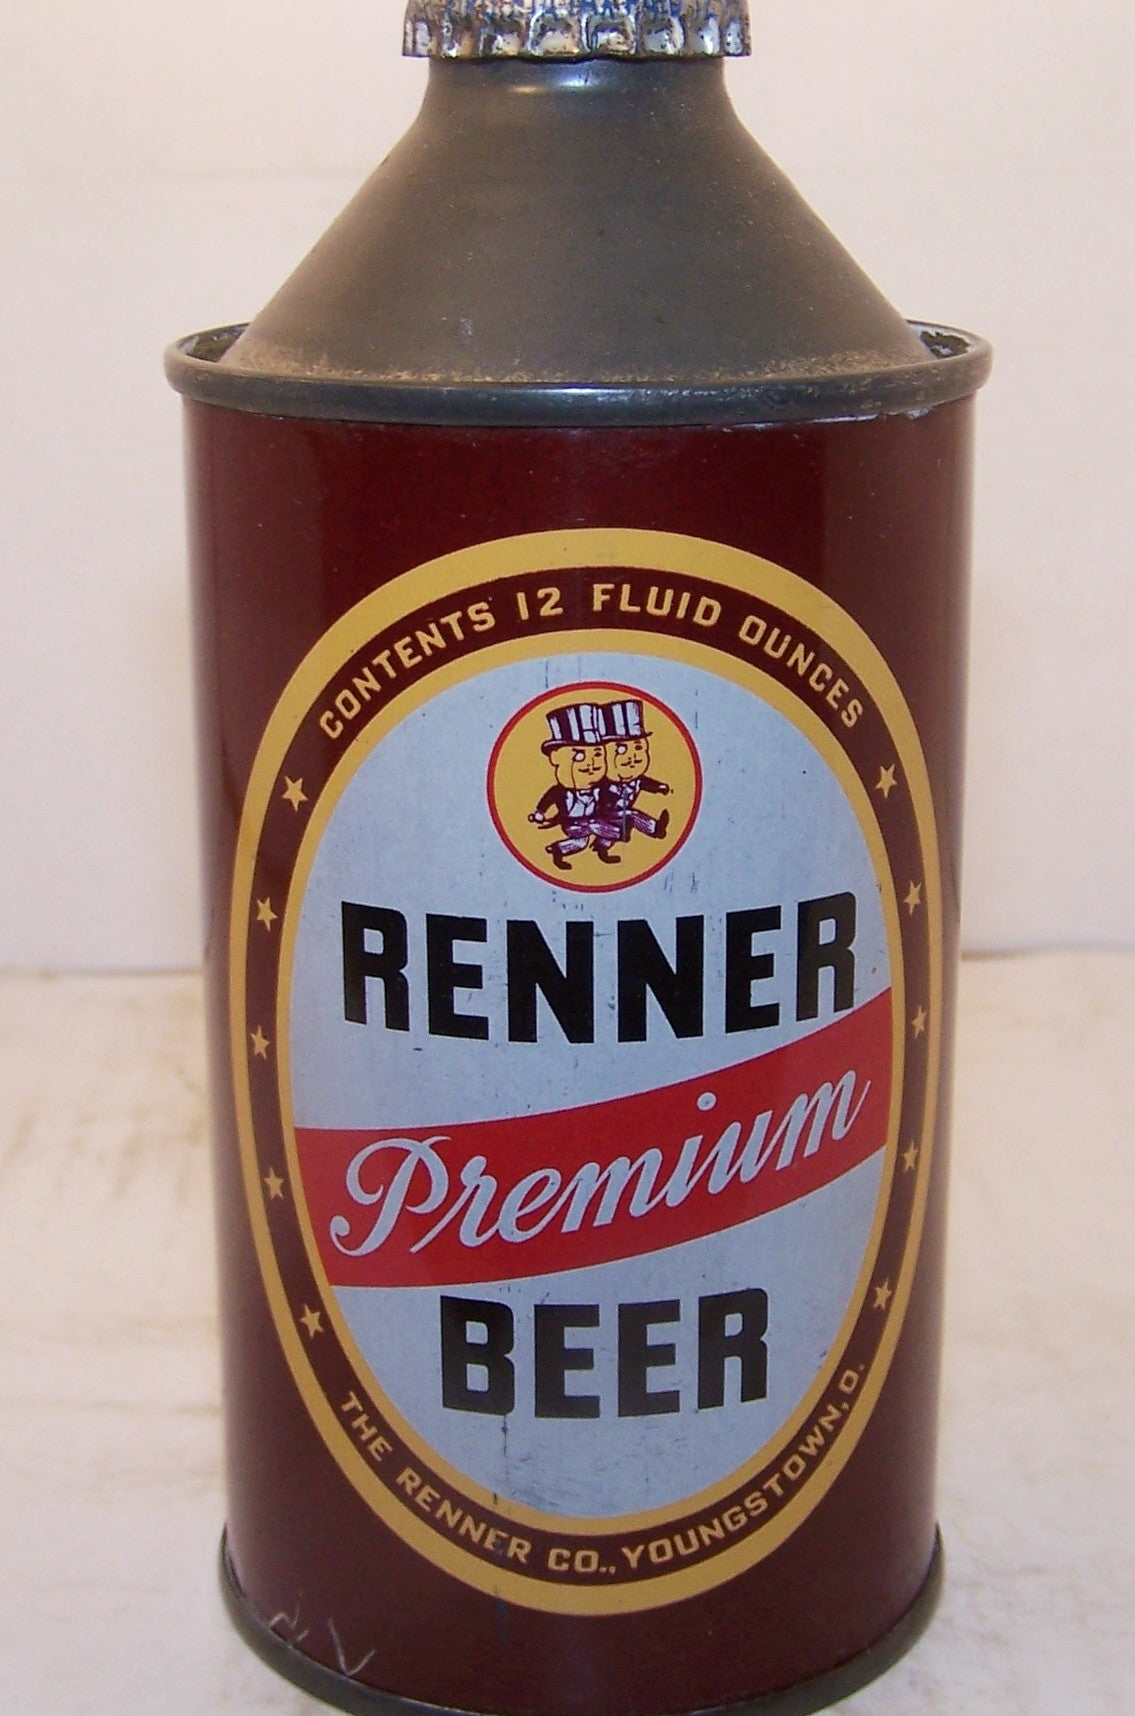 Renner Premium Beer, USBC 181-27 Non-IRTP, Grade 1/1- Sold on 02/27/16